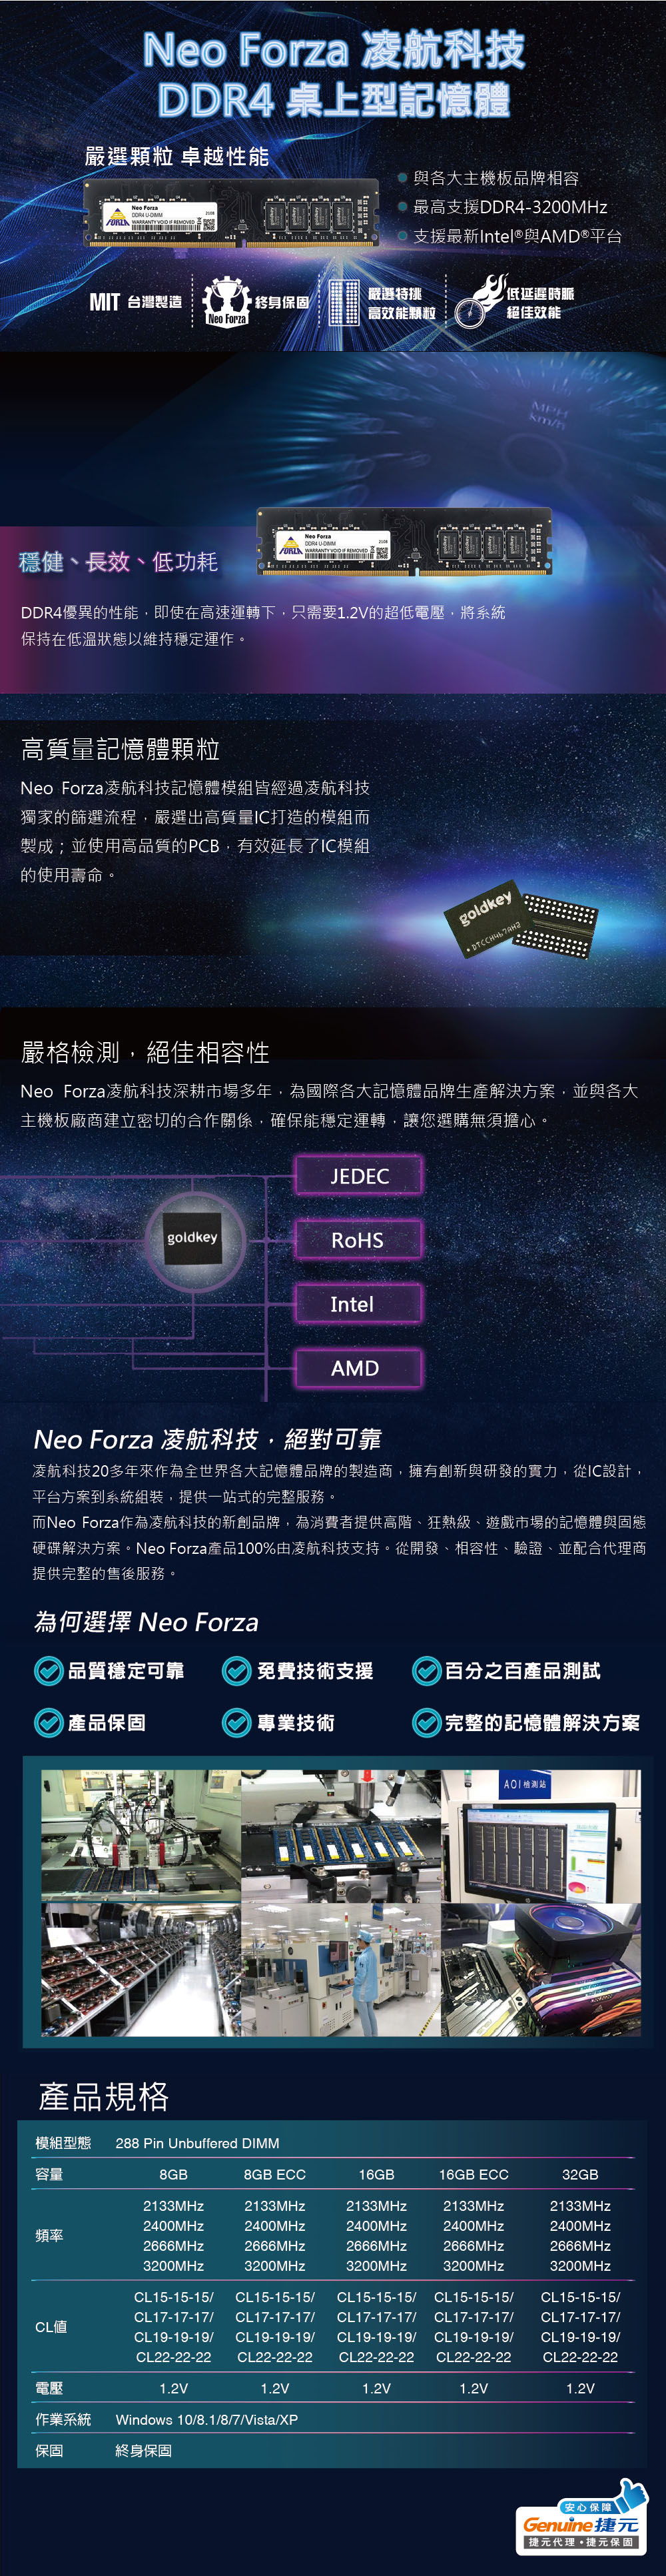 Neo Forza 凌航科技 桌上型記憶體嚴選顆粒 卓越性能Neo ForzaDORA U-DIMM WARRANTY VOID  REMOVED與各大主機板品牌相容 最高支援DDR4-支援最新Intel ®與AMD ®平台MIT 台灣製造嚴選特挑保固Neo Forza高效能顆粒Neo ForzaDDR4 U-DIMM穩健、長效、低功耗 WARRANTY VOID IF REMOVED低延遲時脈絕佳效能DDR4優異的性能即使在高速運轉下,只需要1.2V的超低電壓,將系統保持在低溫狀態以維持穩定運作。高質量記憶體顆粒Neo Forza凌航科技記憶體模組皆經過凌航科技獨家的篩選流程,嚴選出高質量IC打造的模組而製成;並使用高品質的PCB,有效延長了IC模組的使用壽命。MPHkm/h嚴格,絕佳相容性goldkey Neo Forza凌航科技深耕市場多年,為國際各大記憶體品牌生產解決方案,並與各大主機板廠商建立密切的合作關係,確保能穩定運轉,讓您選購無須擔心。JEDECgoldkeyIntelAMDNeo Forza 凌航科技,絕對可靠凌航科技20多年來作為全世界各大記憶體品牌的製造商,擁有創新與研發的實力,從IC設計,平台方案到系統組裝,提供一站式的完整服務。而Neo Forza作為凌航科技的新創品牌,為消費者提供高階、狂熱級、遊戲市場的記憶體與固態硬碟解決方案。Neo Forza產品100%由凌航科技支持。從開發、相容性、驗證、並配合代理商提供完整的售後服務。為何選擇 Neo Forza品質穩定可靠免費技術支援百分之百產品測試 產品保固專業技術完整的記憶體解決方案產品規格模組型態 288 Pin Unbuffered DIMM檢測站容量8GB8GB ECC16GB16GB ECC32GB2133MHz2133MHz2133MHz2400MHz2400MHz頻率2666MHz2666MHz2400MHz2666MHz2133MHz2400MHz2133MHz2400MHz2666MHz2666MHz3200MHz3200MHz3200MHz3200MHzCL15-15-15/ CL15-15-15/ CL15-15-15/ CL15-15-15/ CL15-15-15/CLCL17-17-17/ CL17-17-17/ CL17-17-17/ CL17-17-17/CL19-19-19/ CL19-19-19/ CL19-19-19/ CL19-19-19/CL22-22-22 CL22-22-22 CL22-22-22 CL22-22-22CL17-17-17/CL19-19-19/CL22-22-22電壓1.2V1.2V1.2V1.2V1.2V作業系統 Windows 10/8.1/8/7/Vista/XP保固終身保固安心保障Genuine捷元| 捷元代理捷元保固